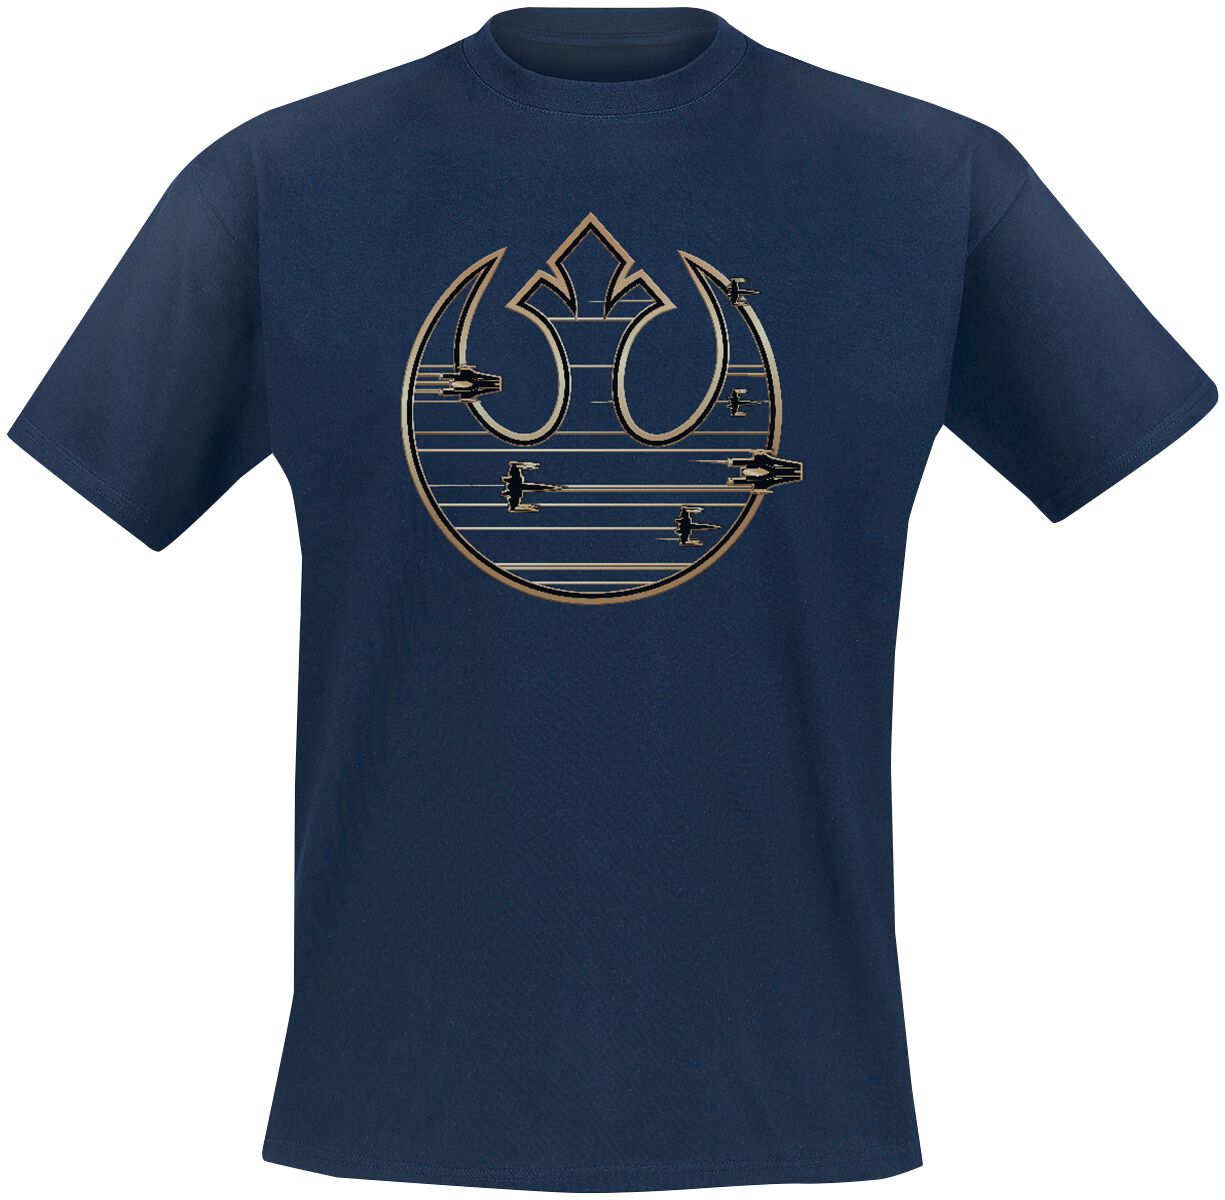 Star Wars Gold Rebel Logo T-Shirt blau in L